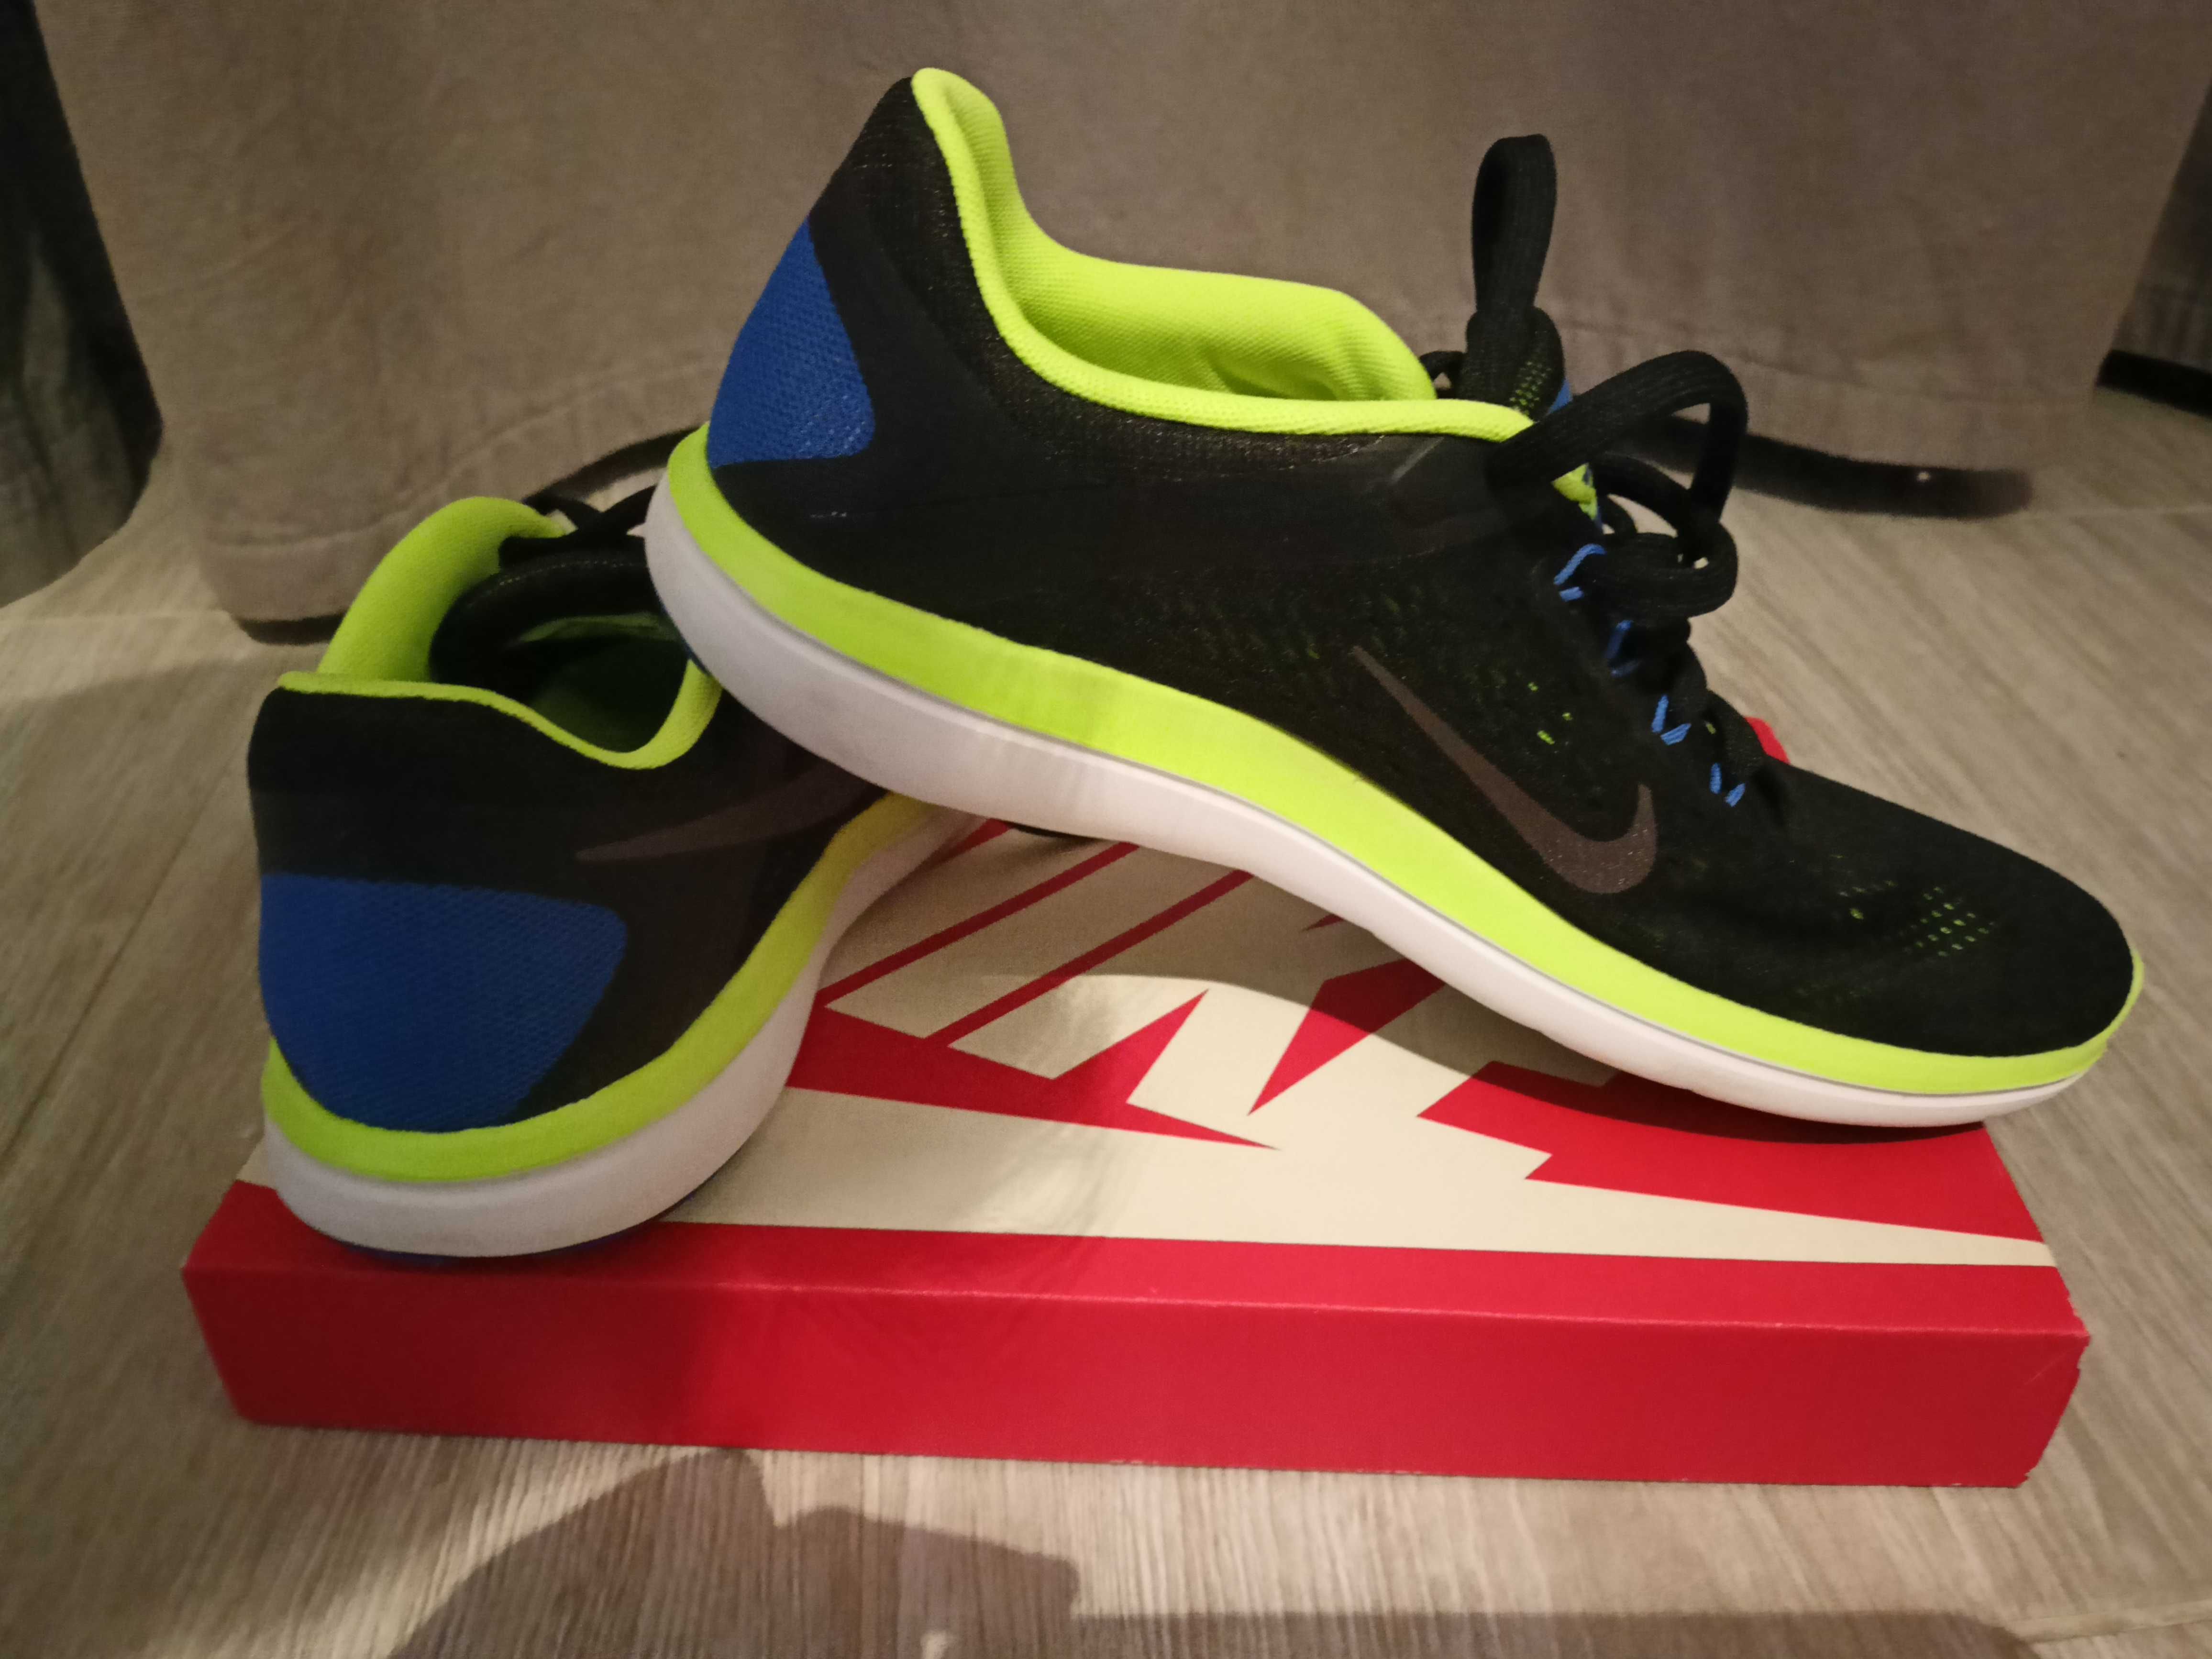 Buty Nike Flex 2016 RN. Rozmiar UK 9,5, CM 28,5 cm, EUR 44,5